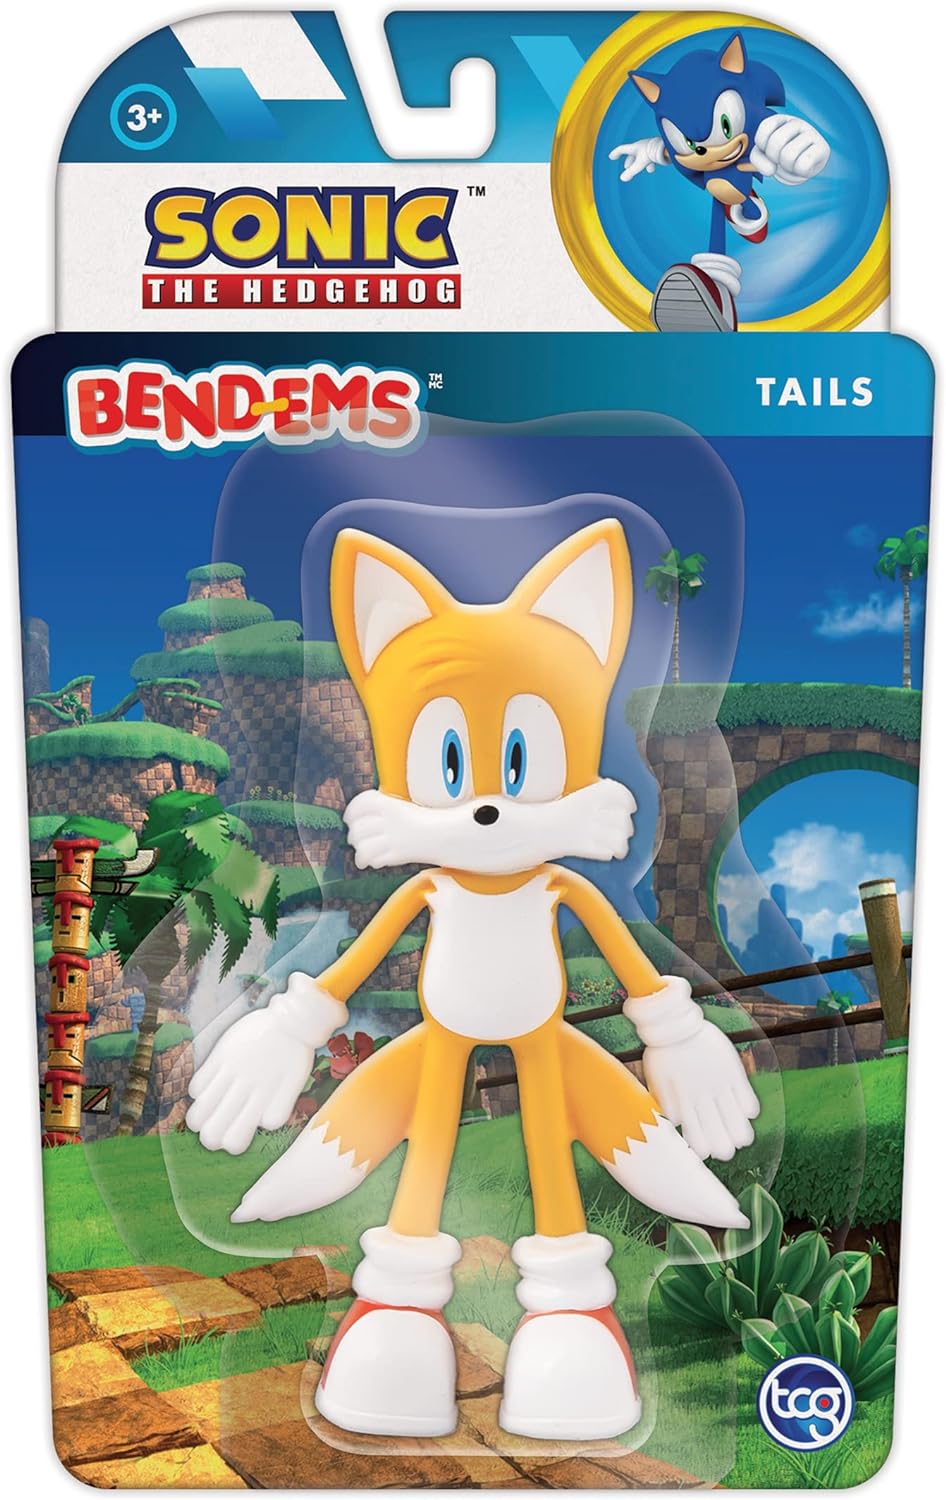 Sonic The Hedgehog Bend-Ems Tails figure NJ Croce 50224